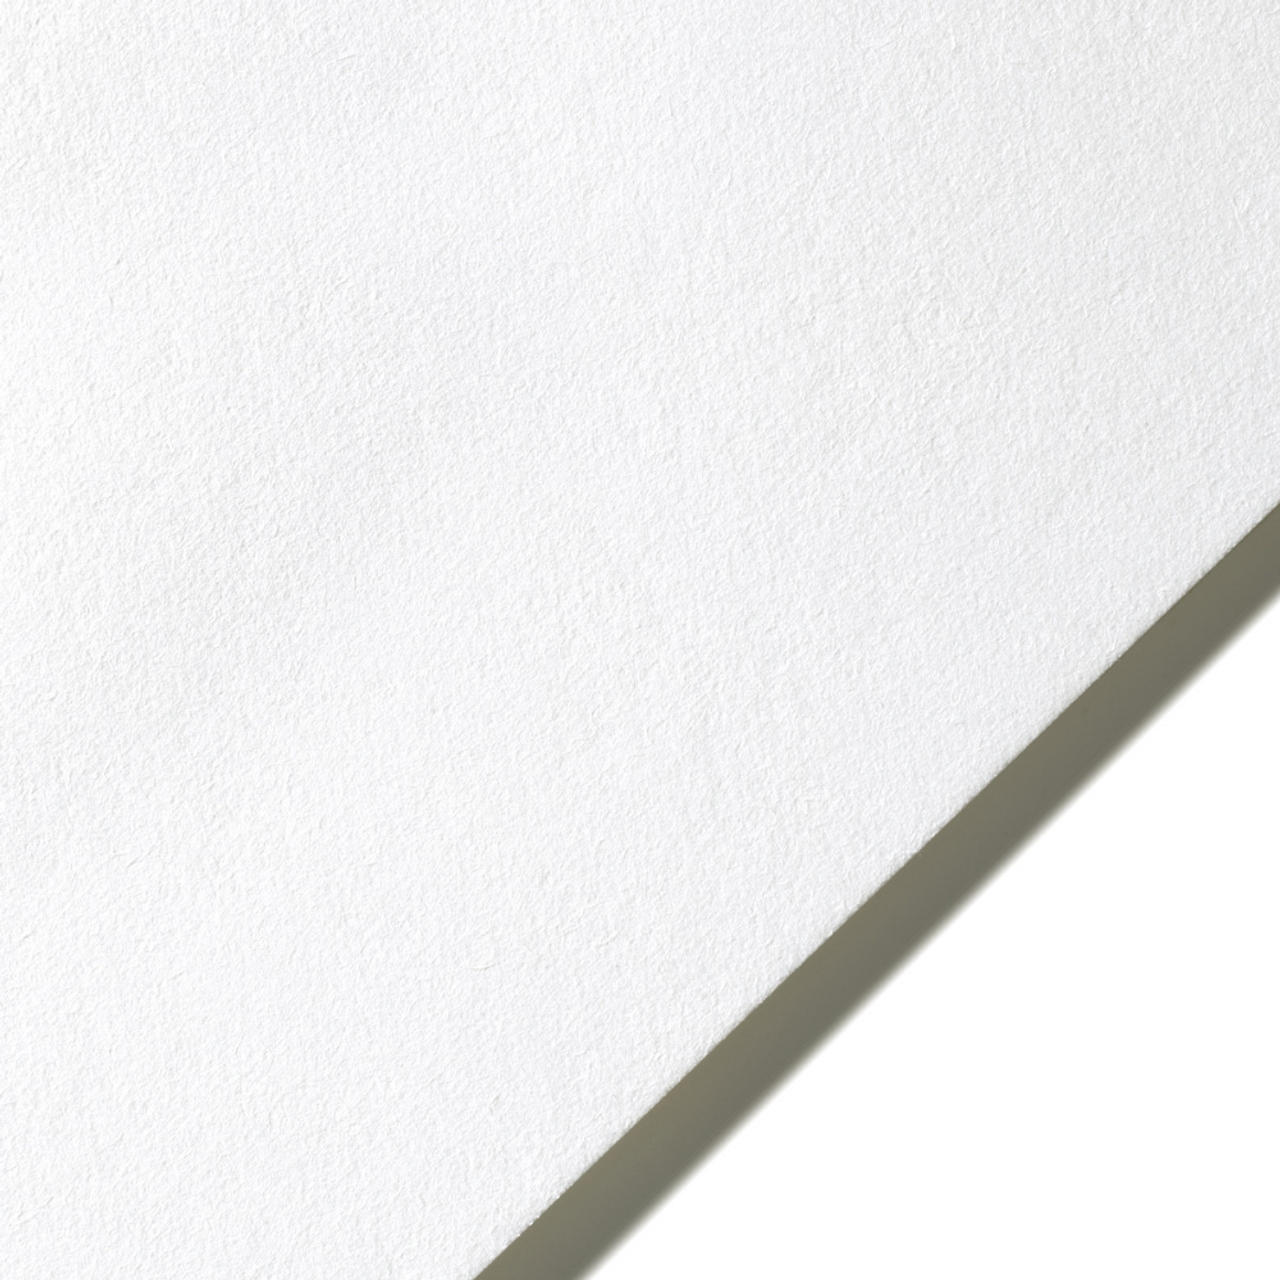 Magnani Pescia White 56x76cm 300gsm sheet